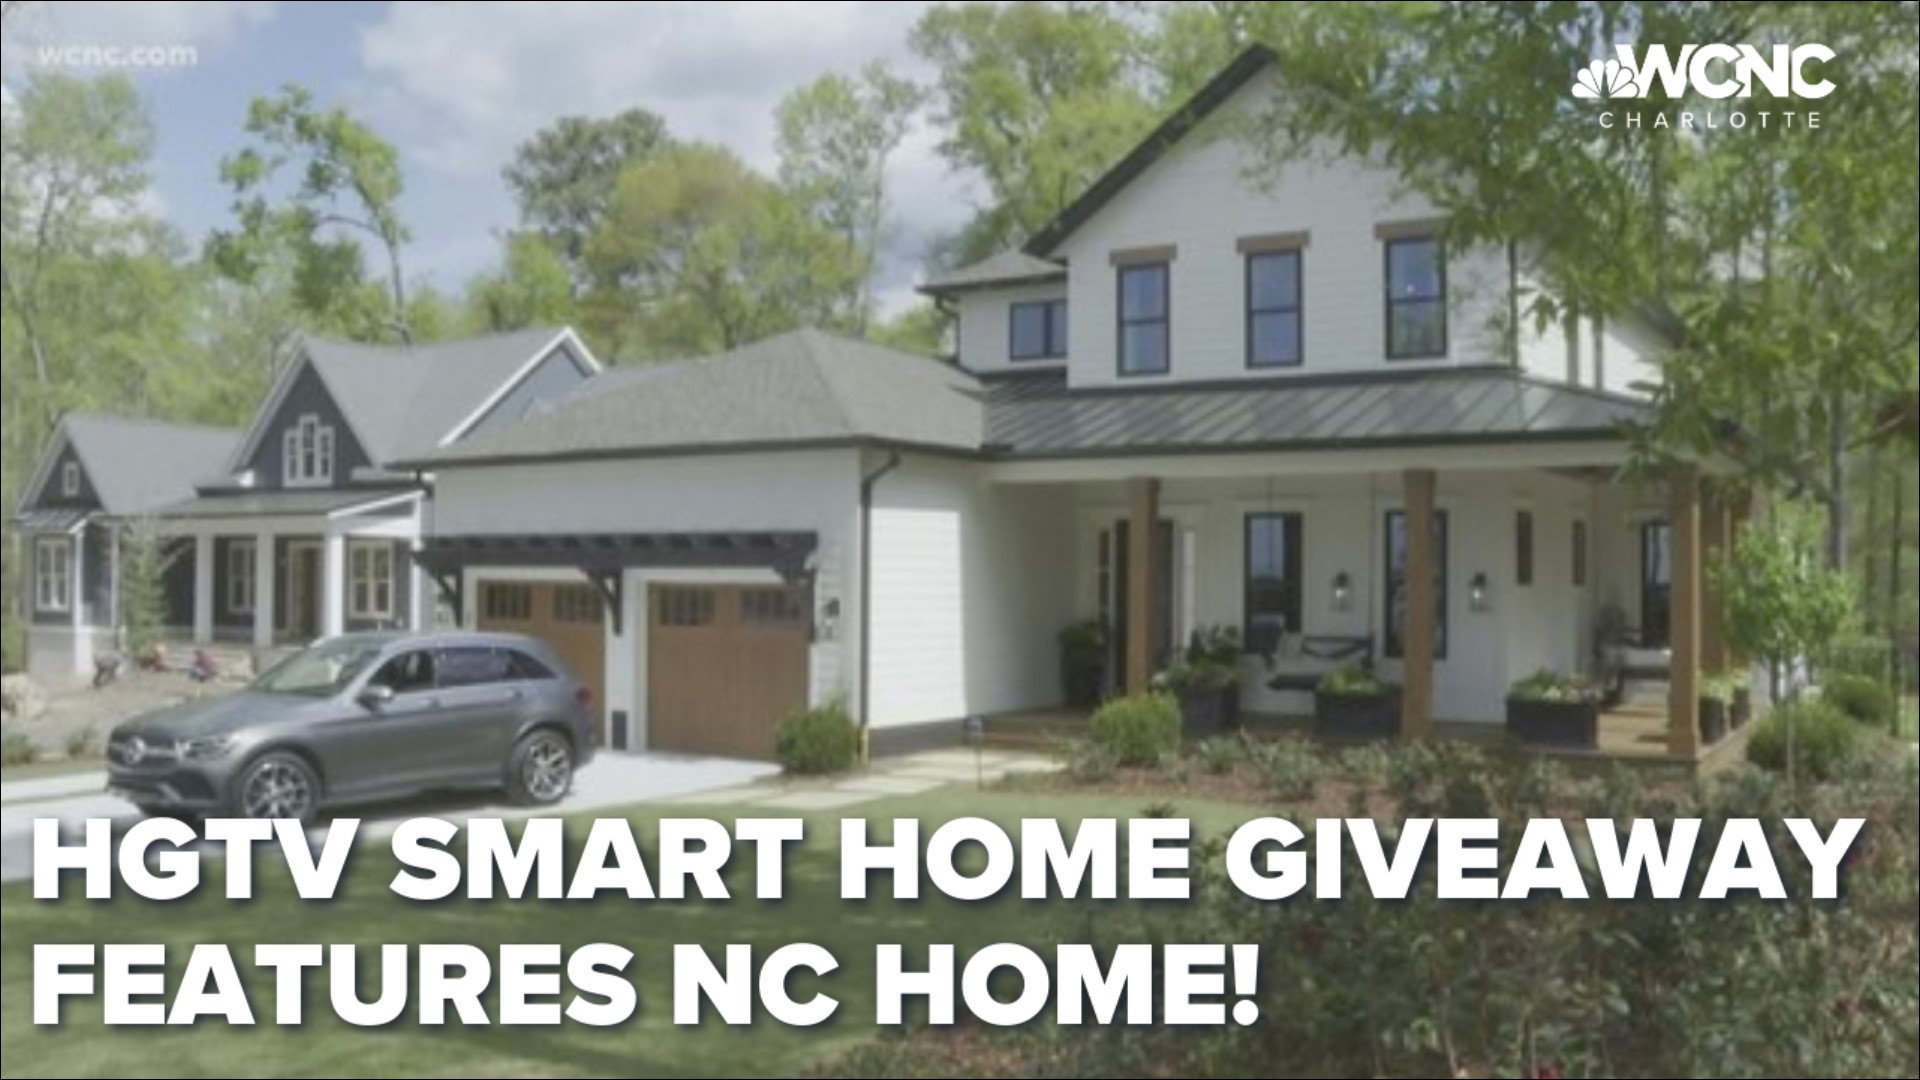 HGTV giving away smart home in North Carolina